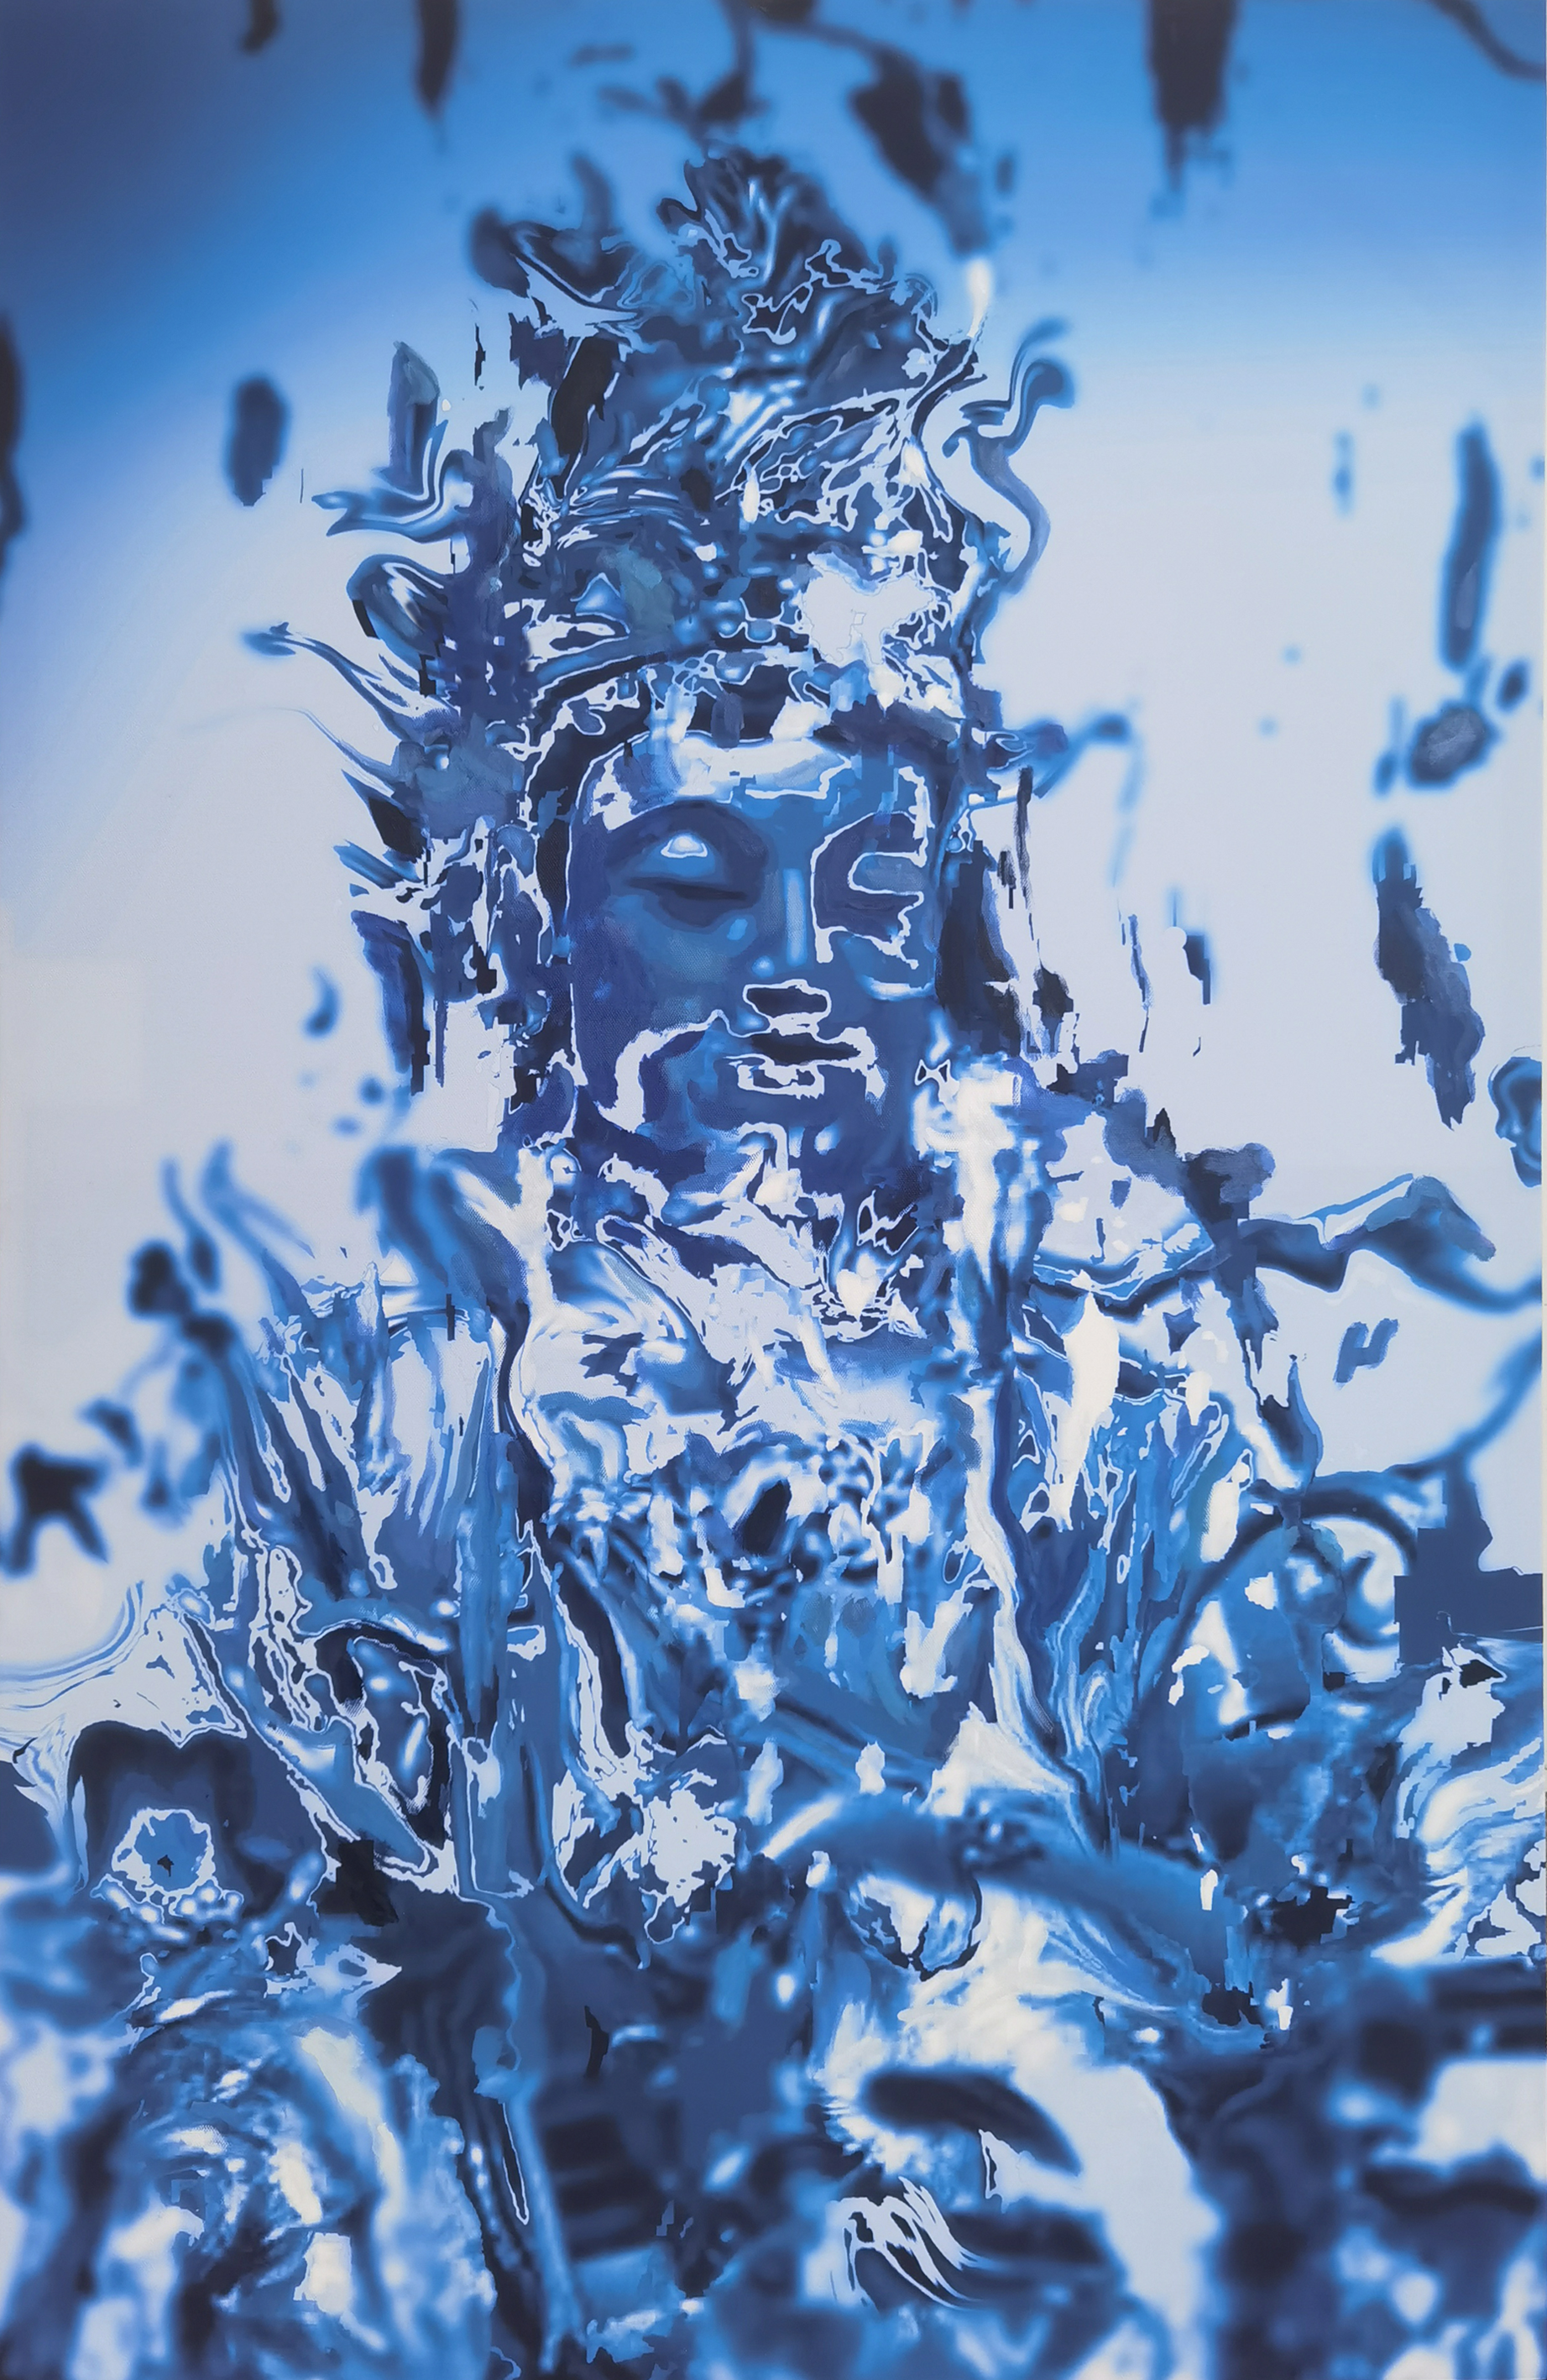 Artitude product "Blue Guānyīn 2" by artist Wang Tiantian.